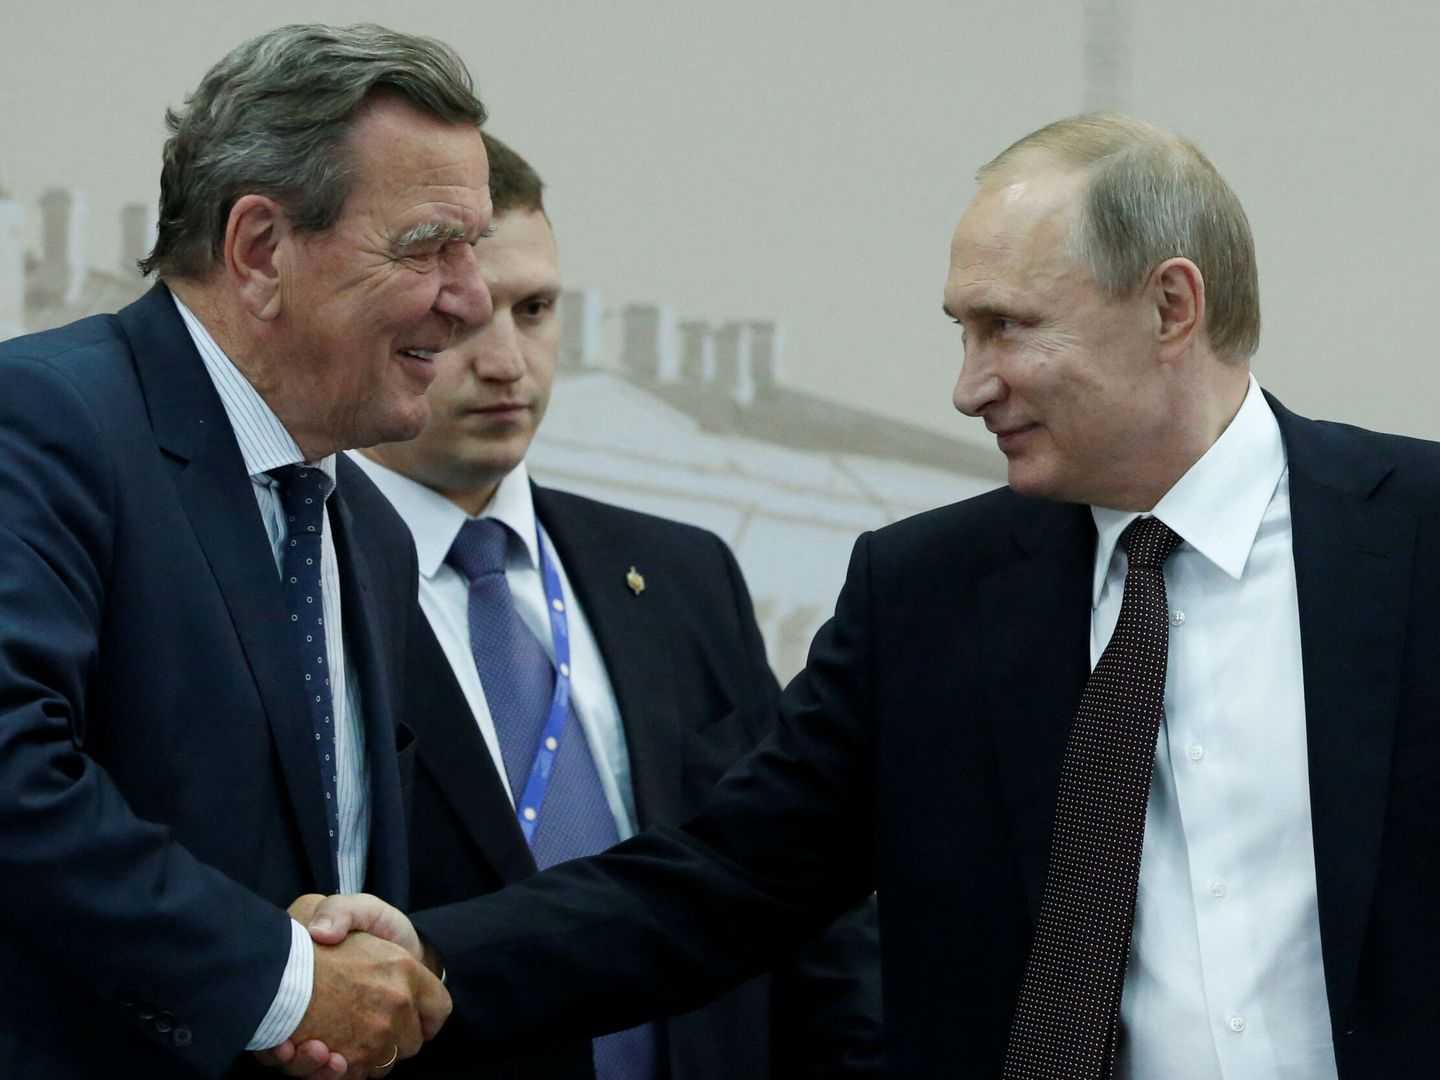 Gerhard Schroeder, junto a Putin, en una imafen de archivo. (Reuters/Grigory Dukor)